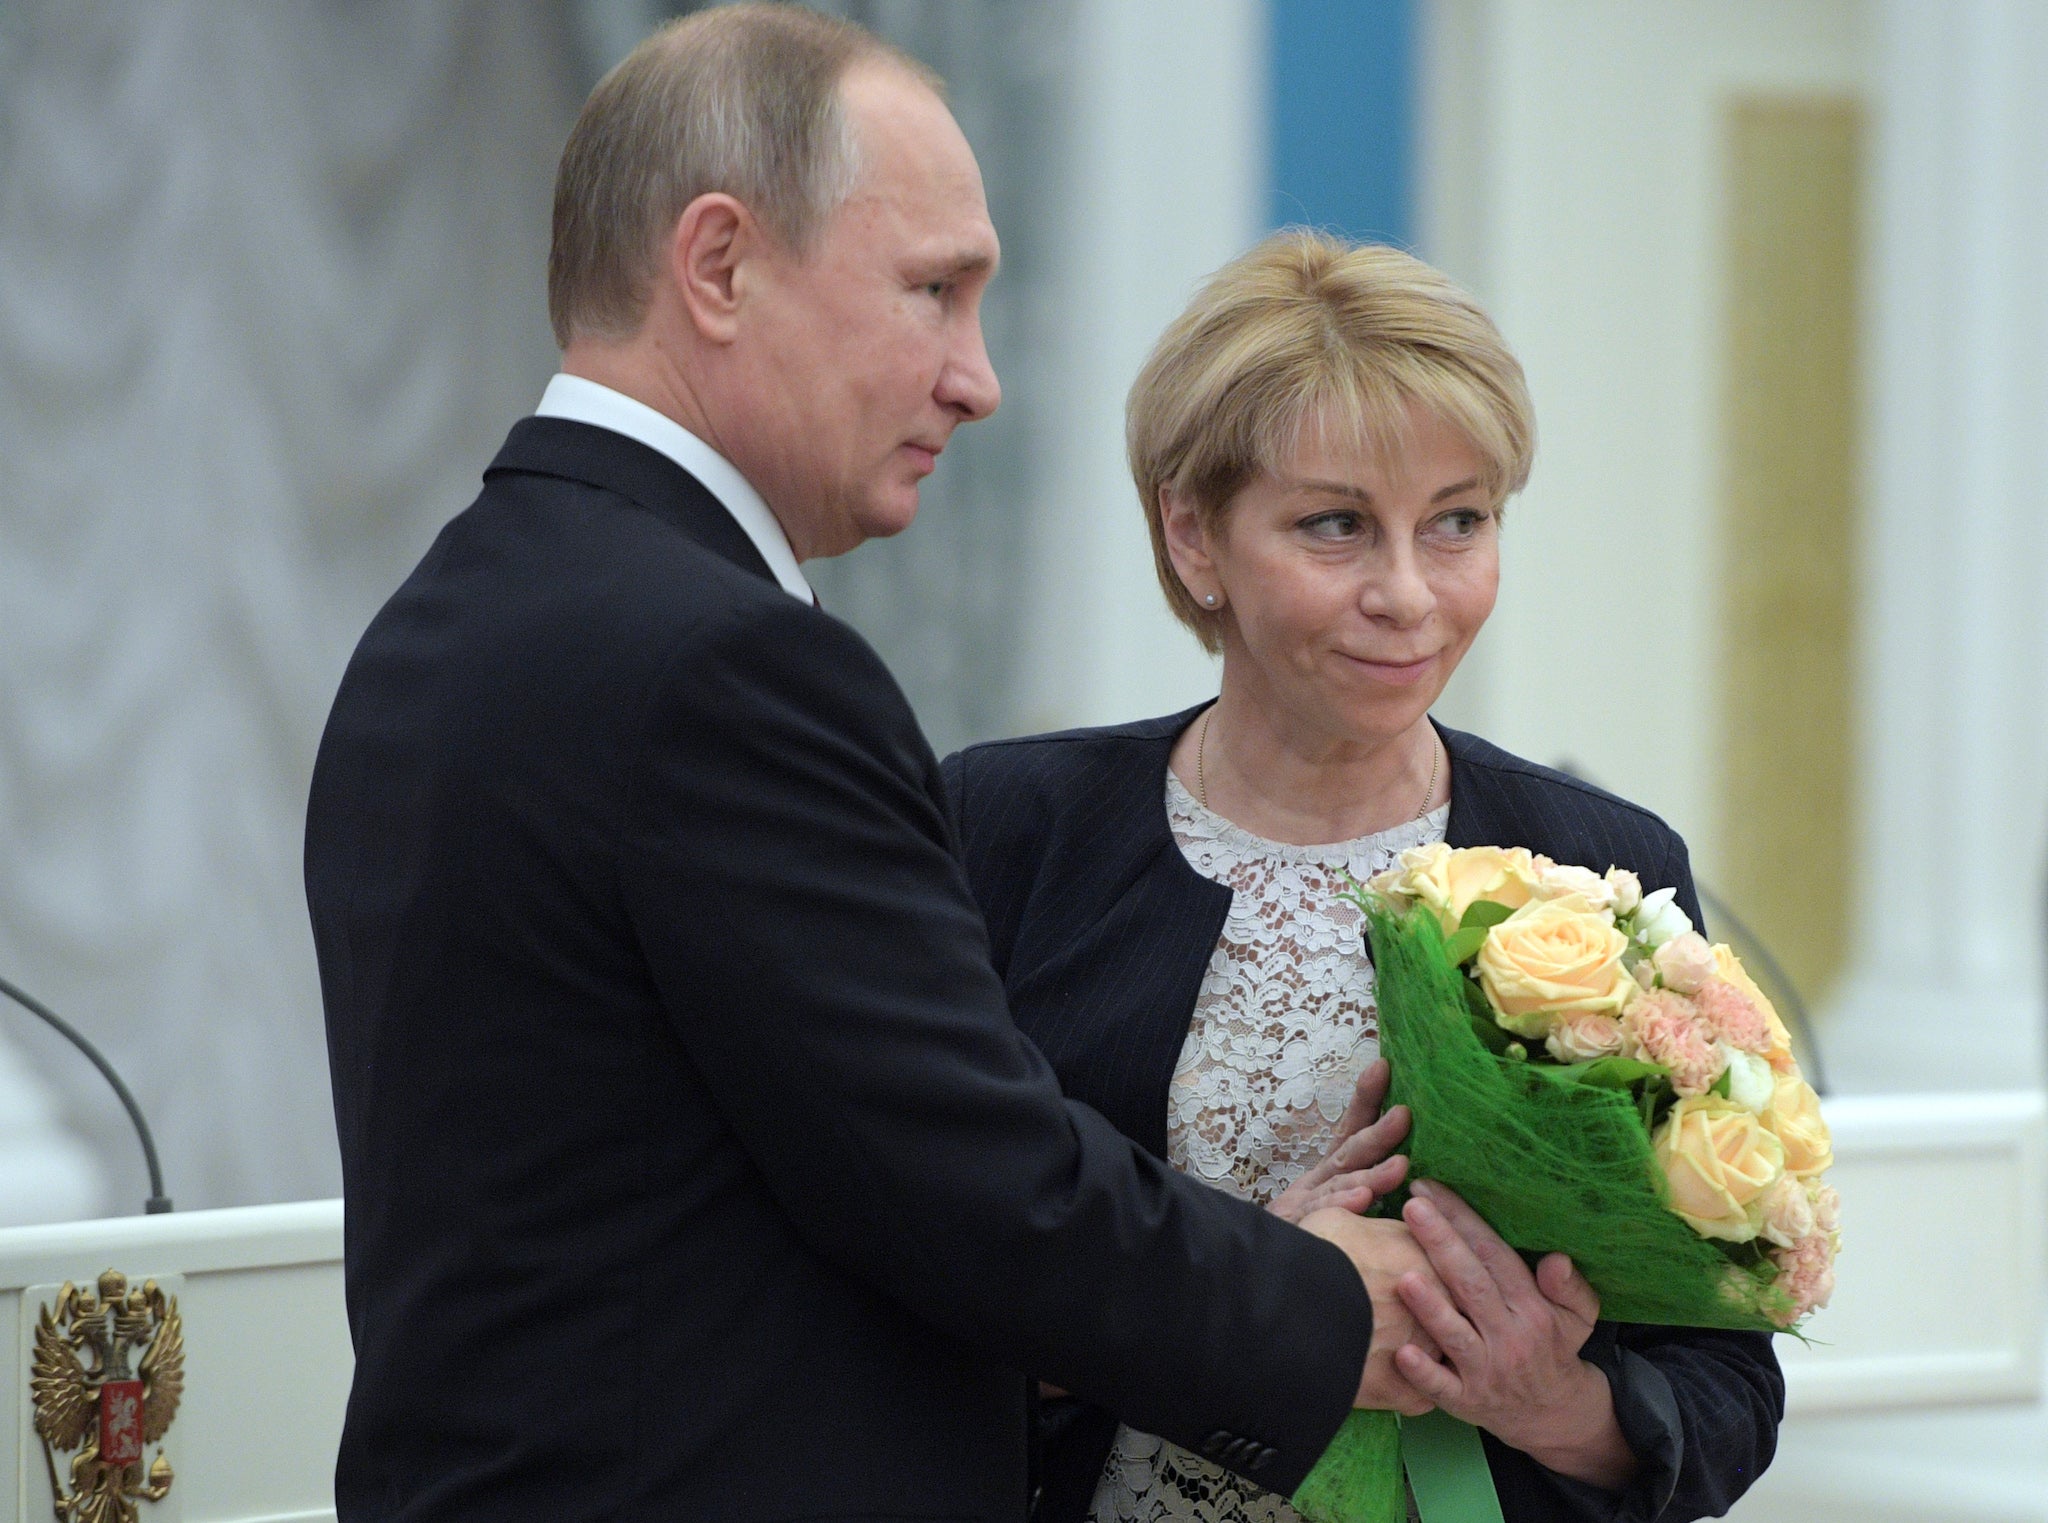 A picture taken on December 8, 2016 shows Russian President Vladimir Putin offering flowers to Yelizaveta Glinka